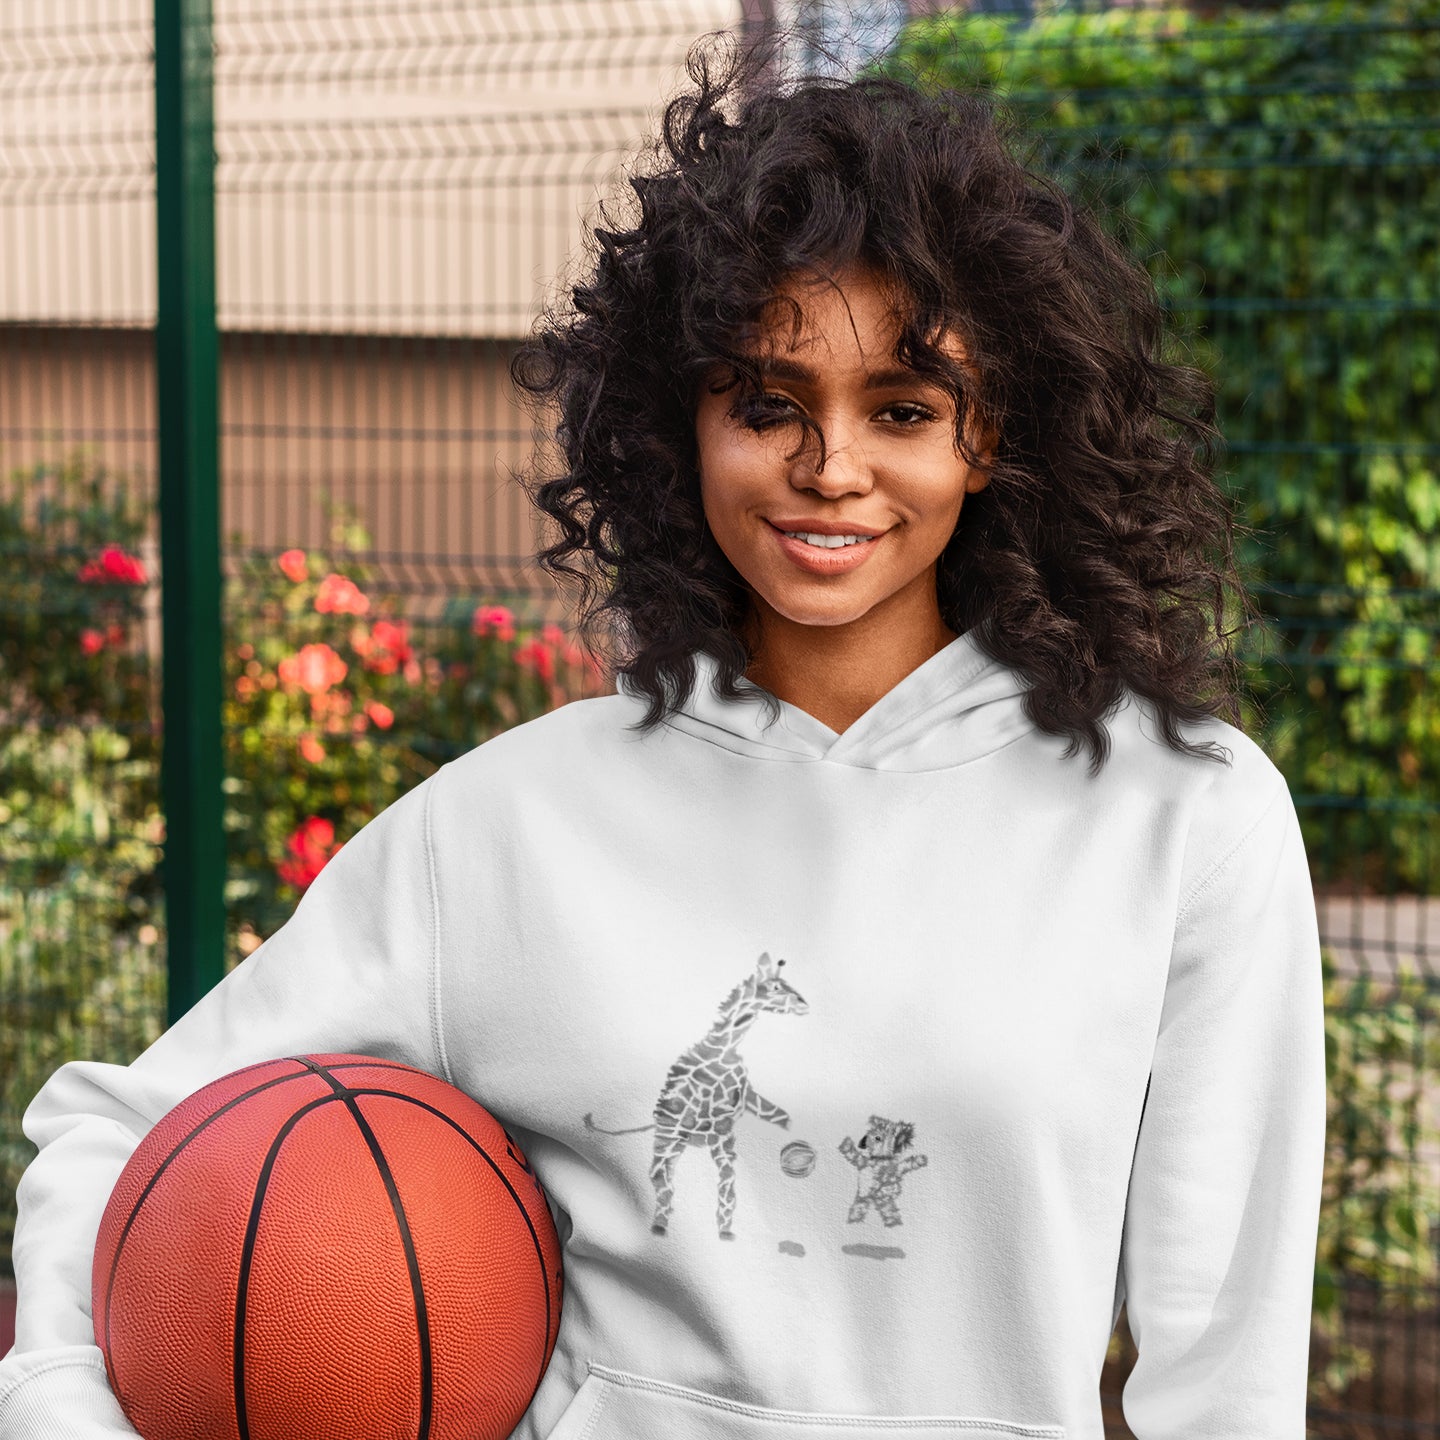 Koala and Giraffe Basketball | Sustainable Hoodie worn by a woman